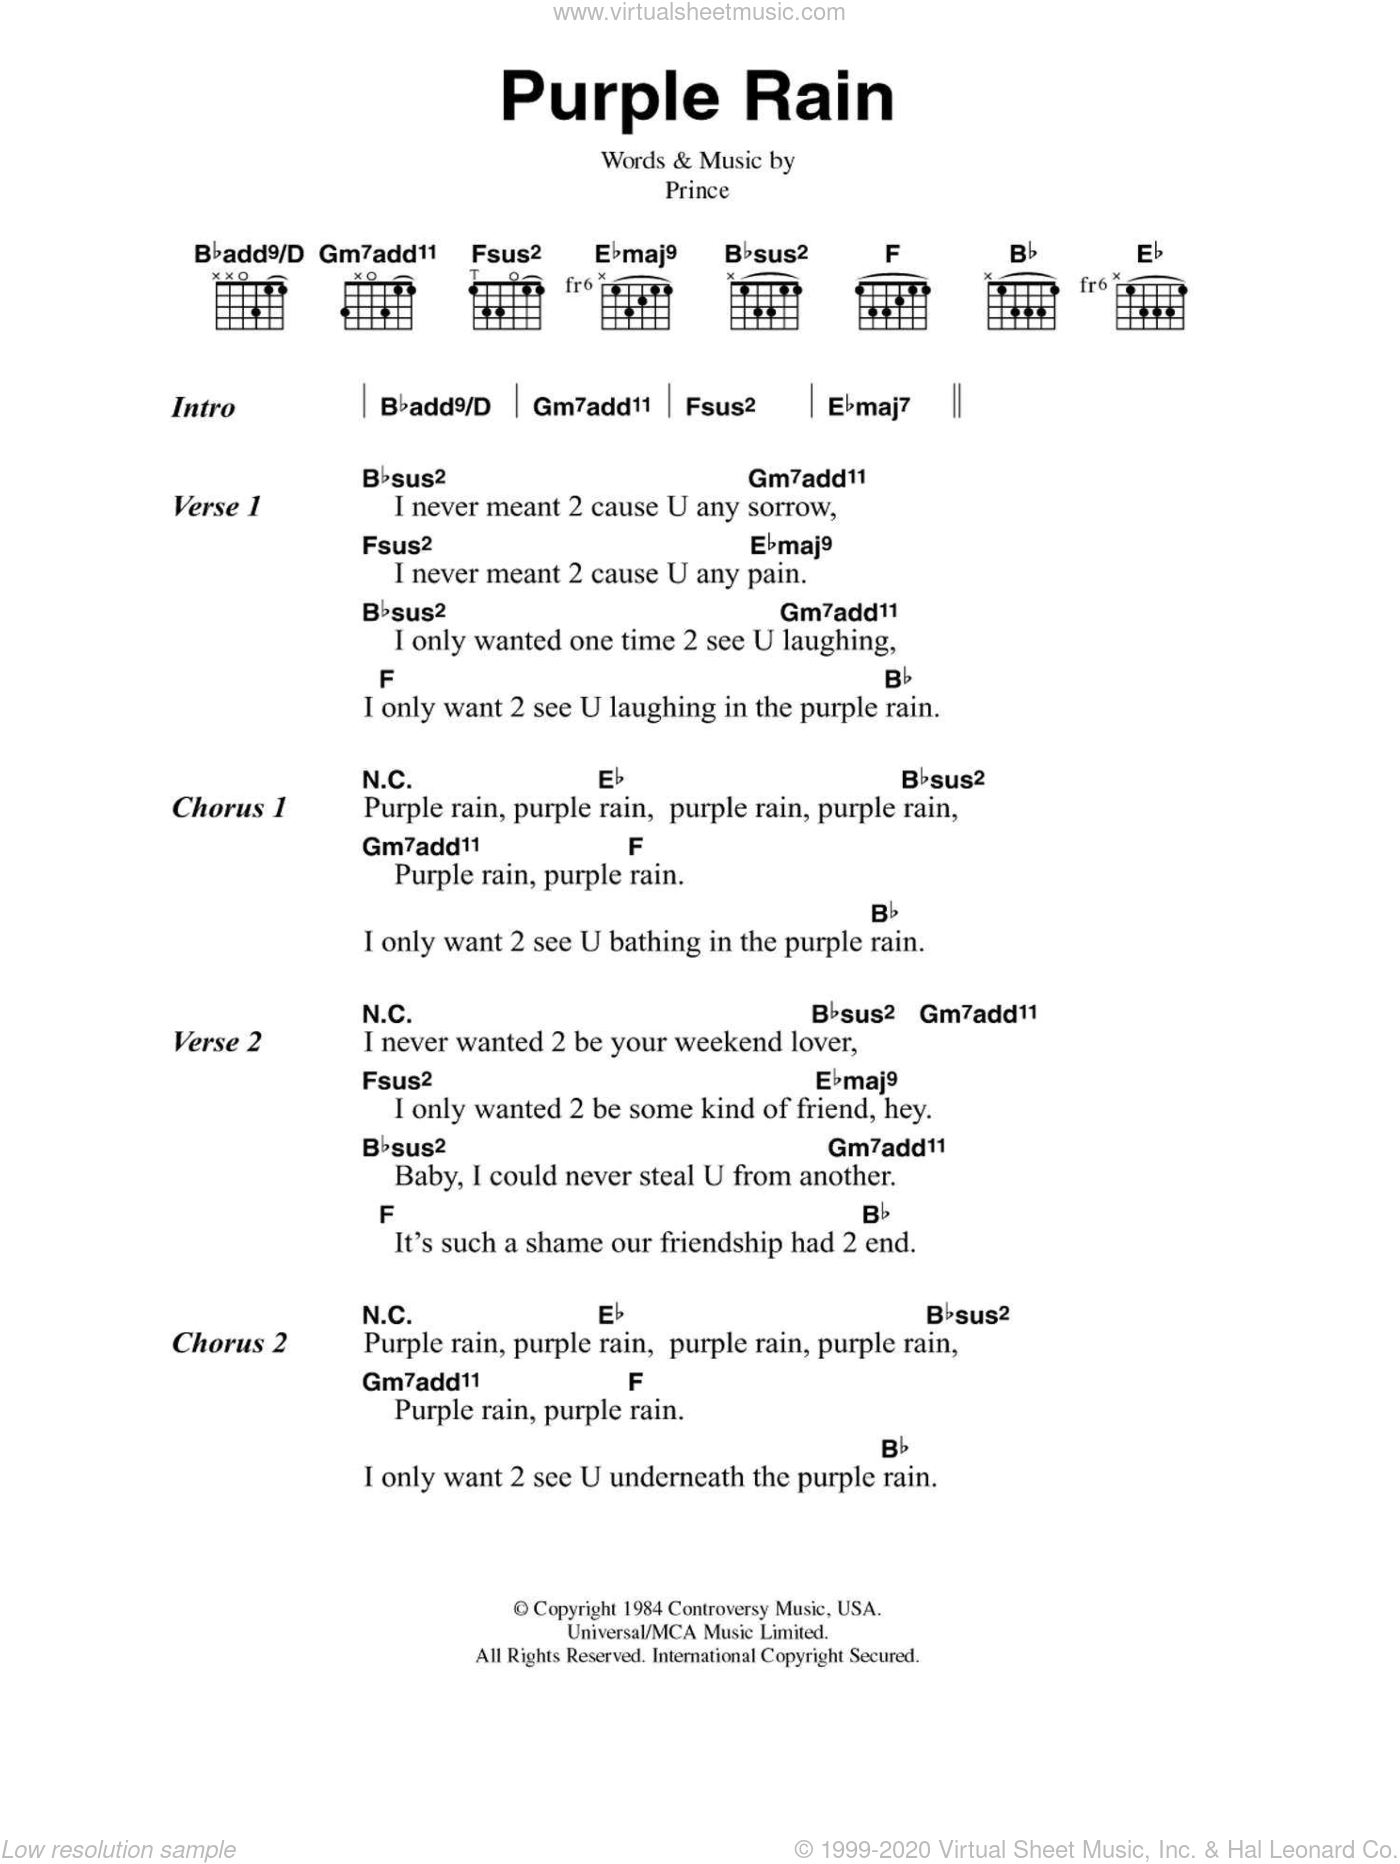 prince guitar songbook pdf download